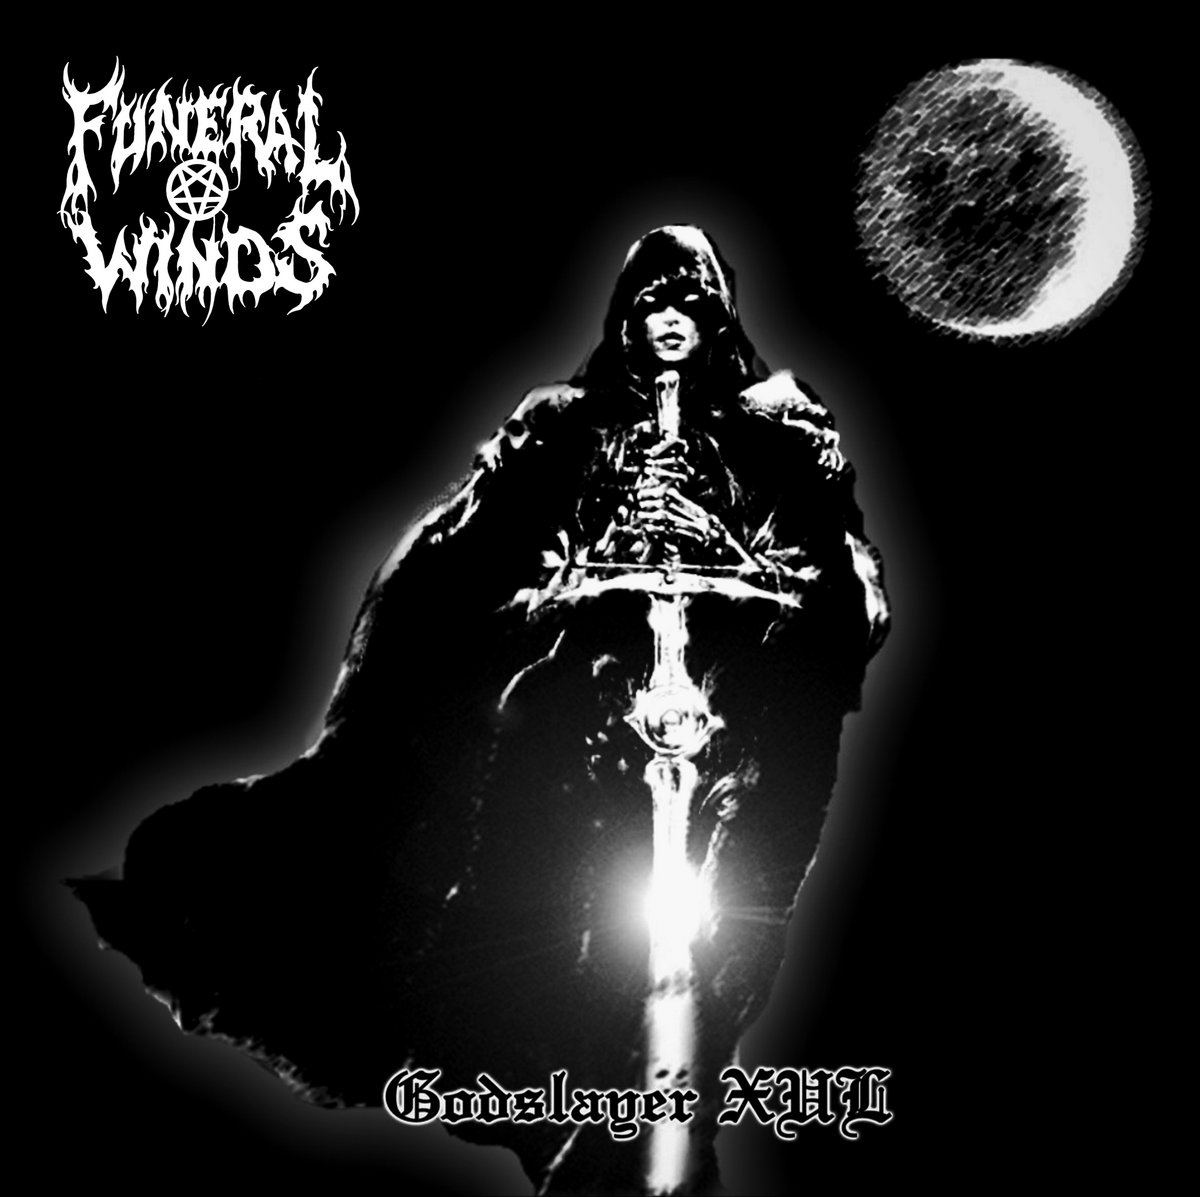 funeral winds – godslayer xul [re-release]